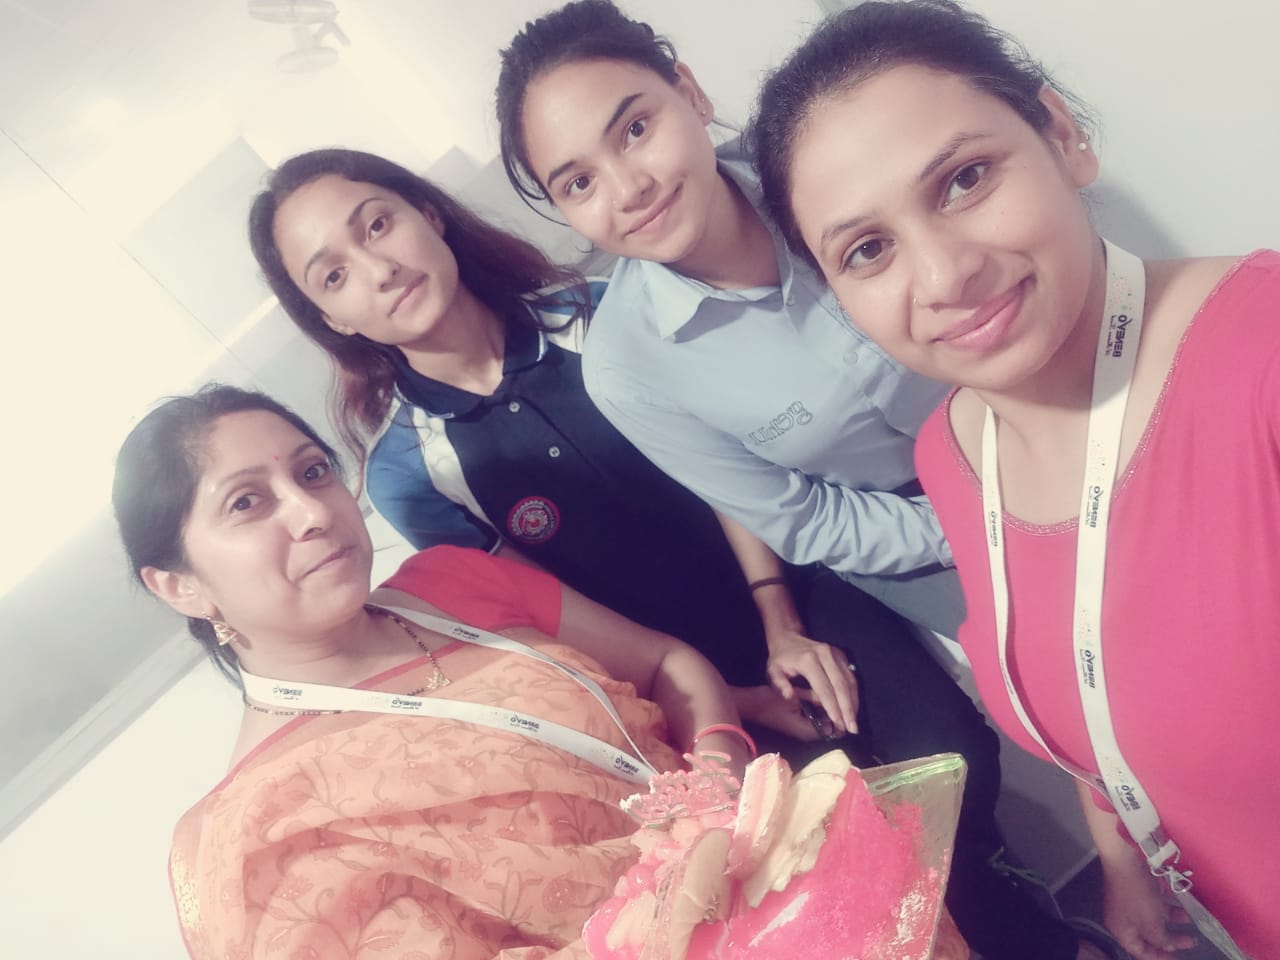 Soumya Baniwal with her team